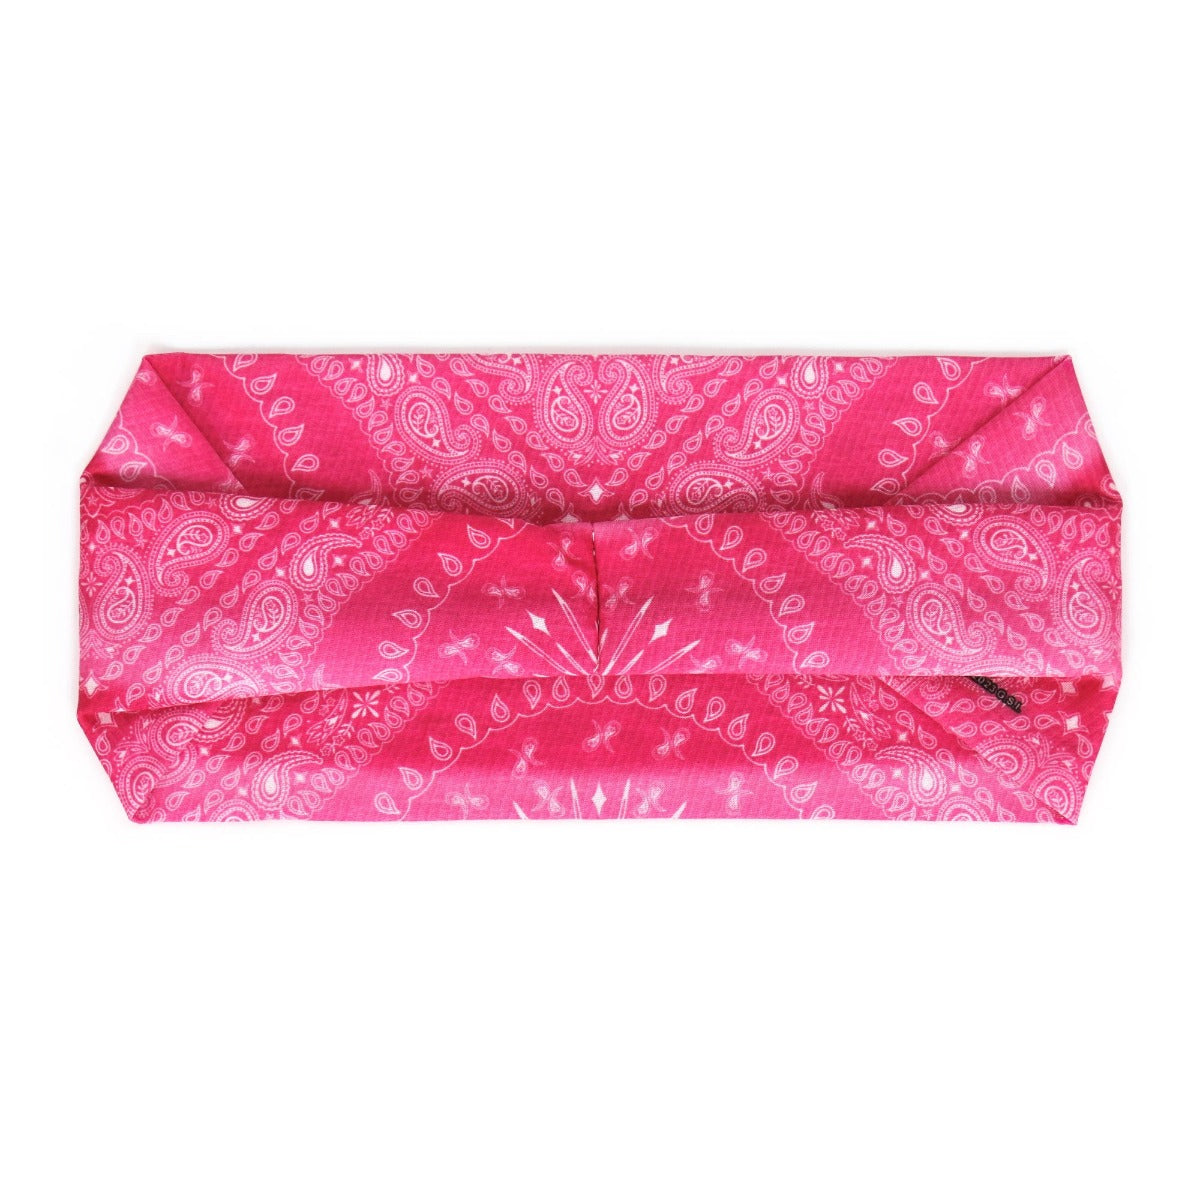 A Hot Leathers Bandana Headband Wraps w/Rhinestones, Pink featuring rhinestone crystals on a white background.